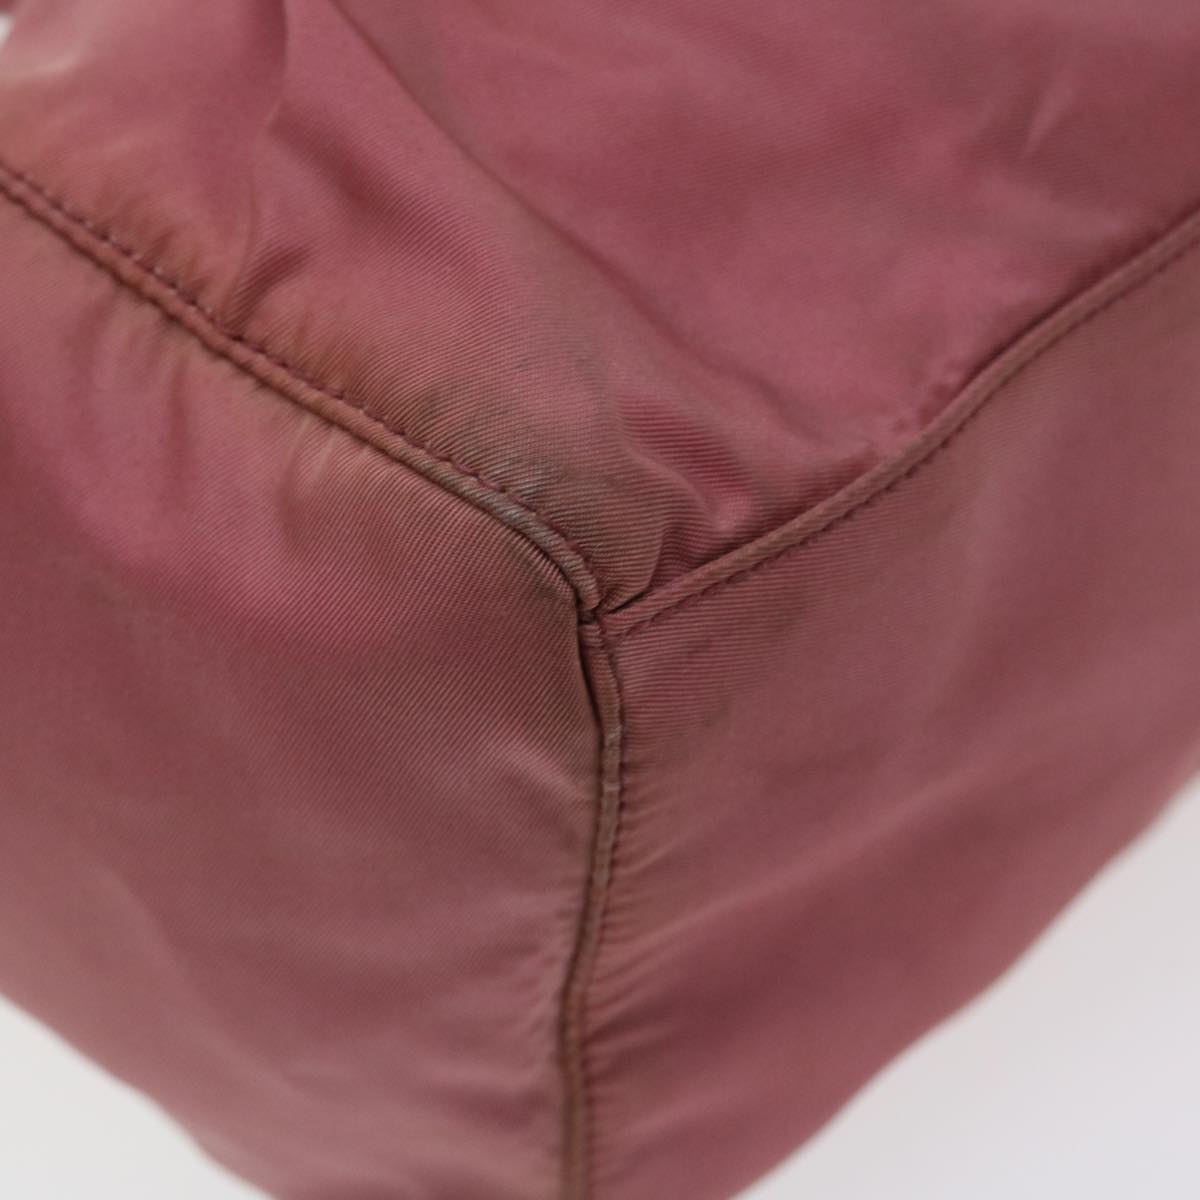 PRADA Shoulder Bag Nylon 2way Pink Auth 36966